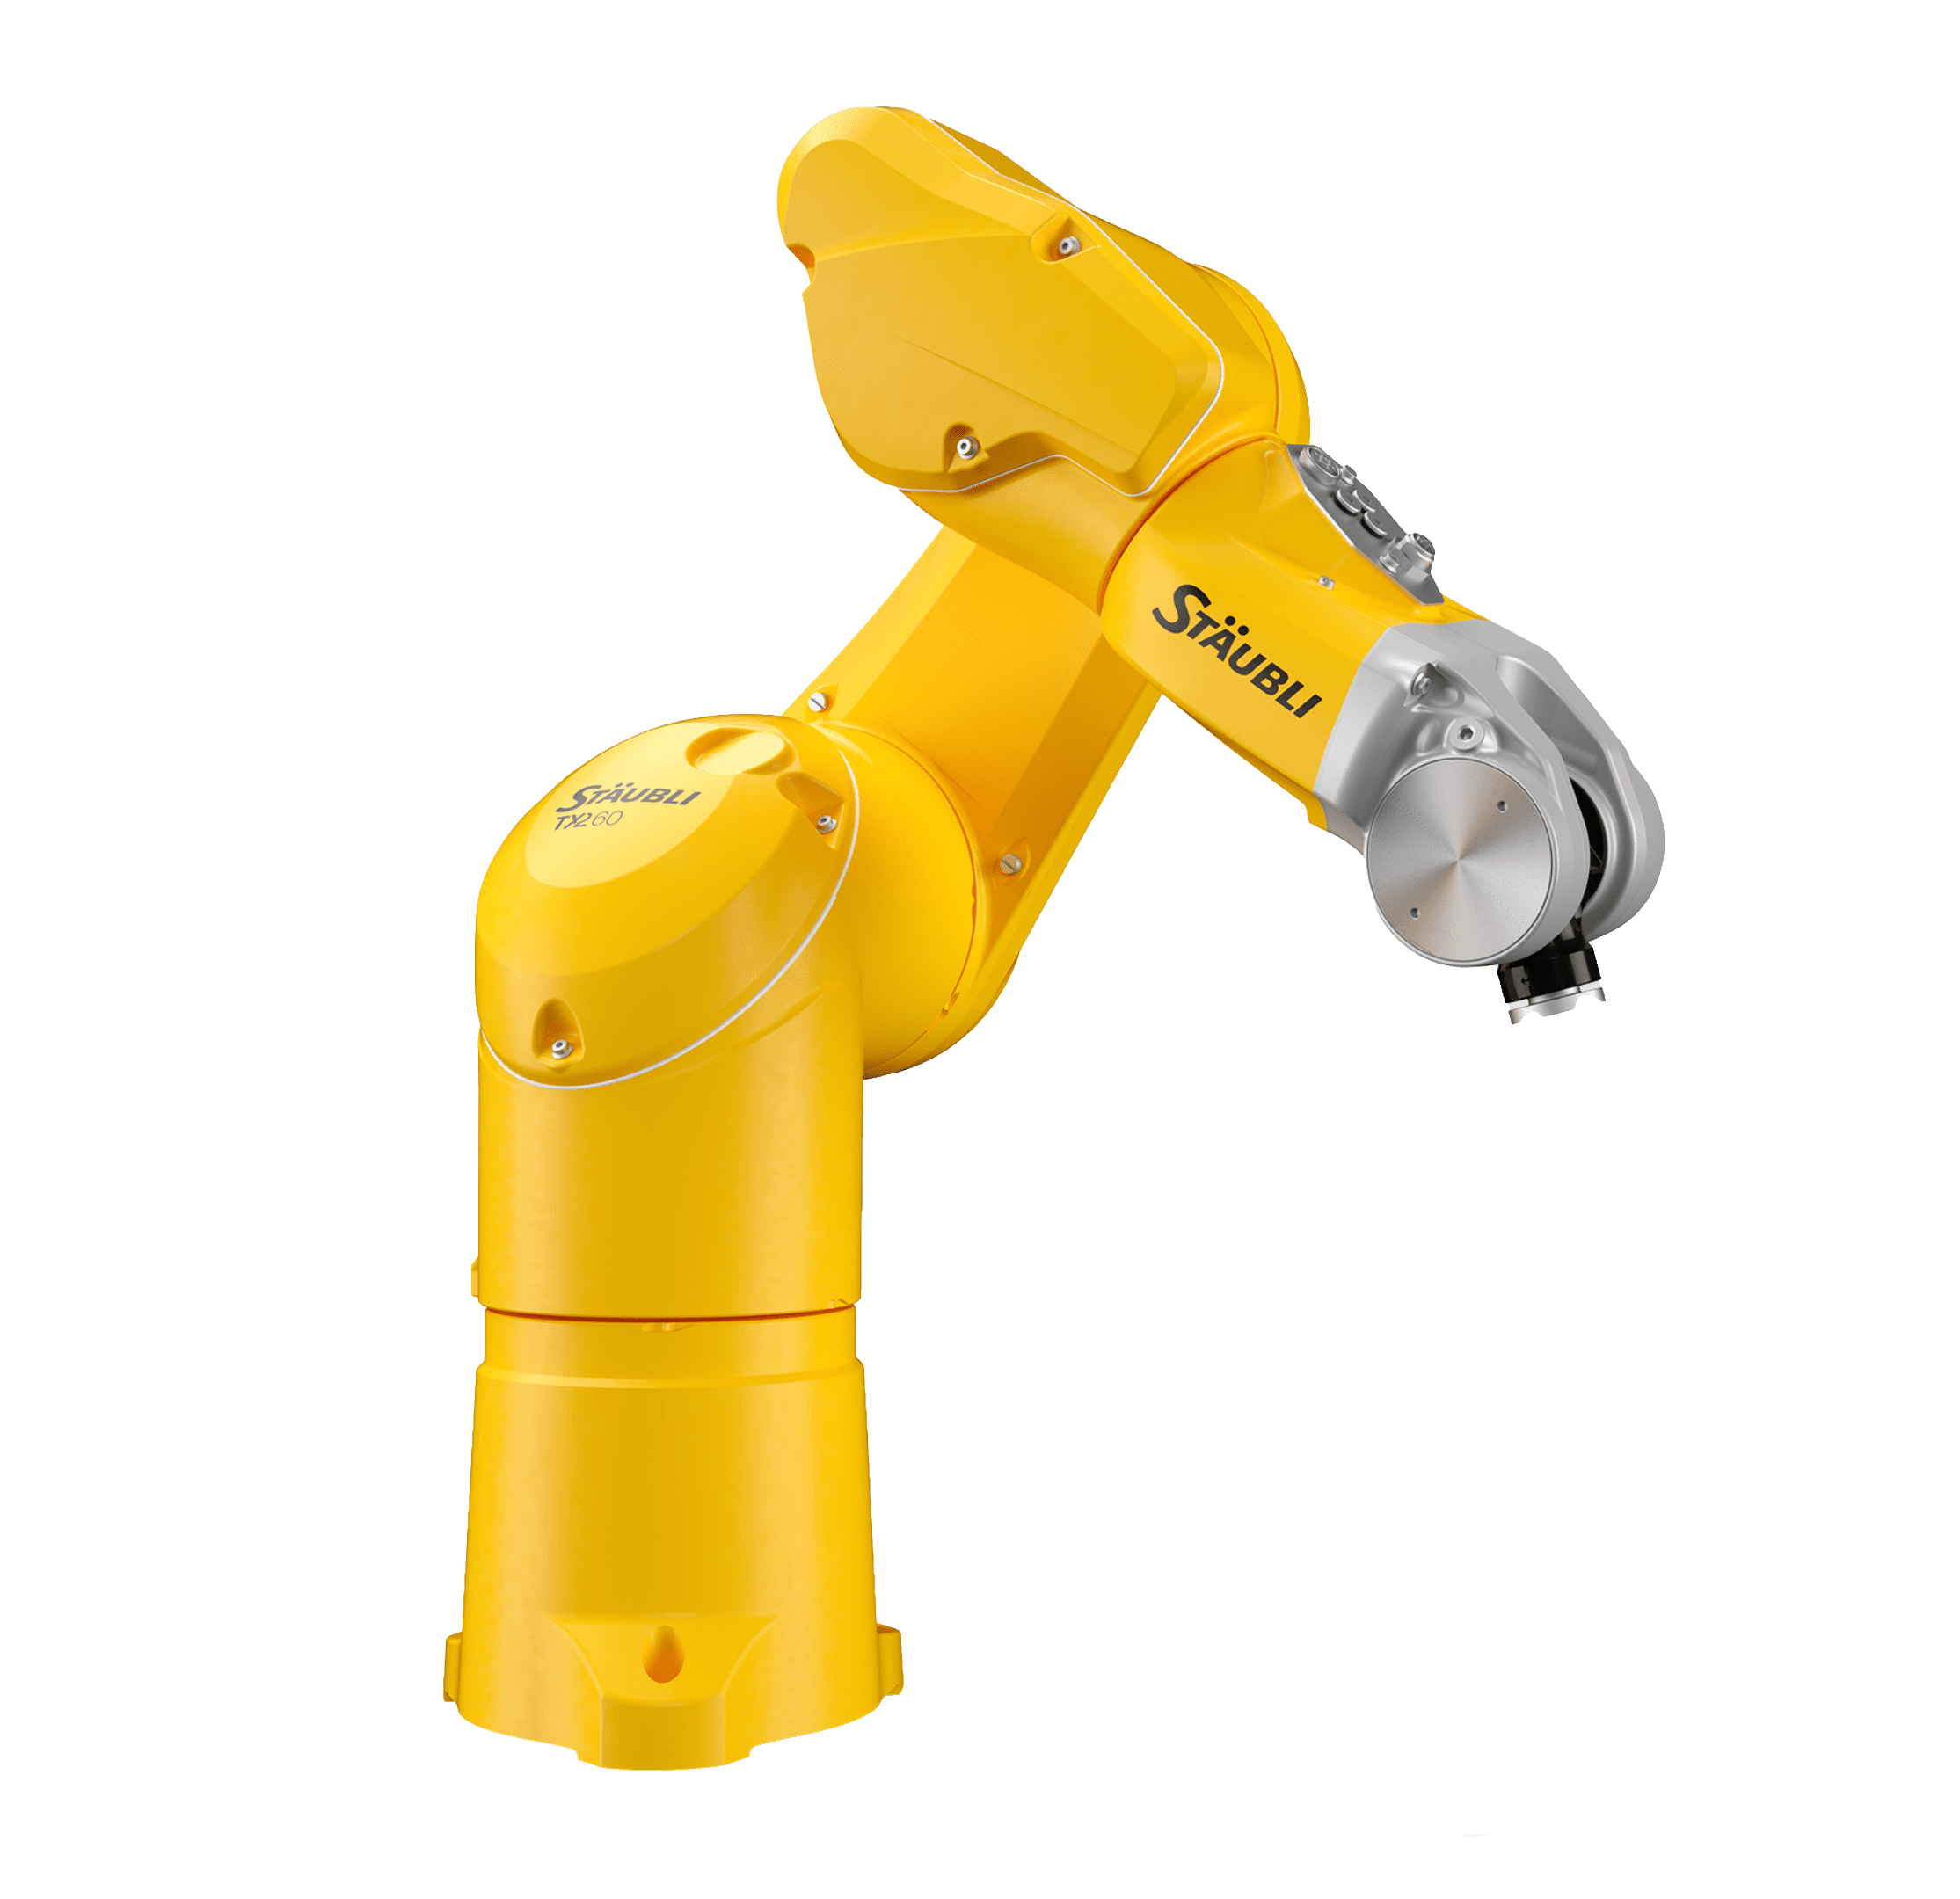 Industrial Robot Staubli TX2-60